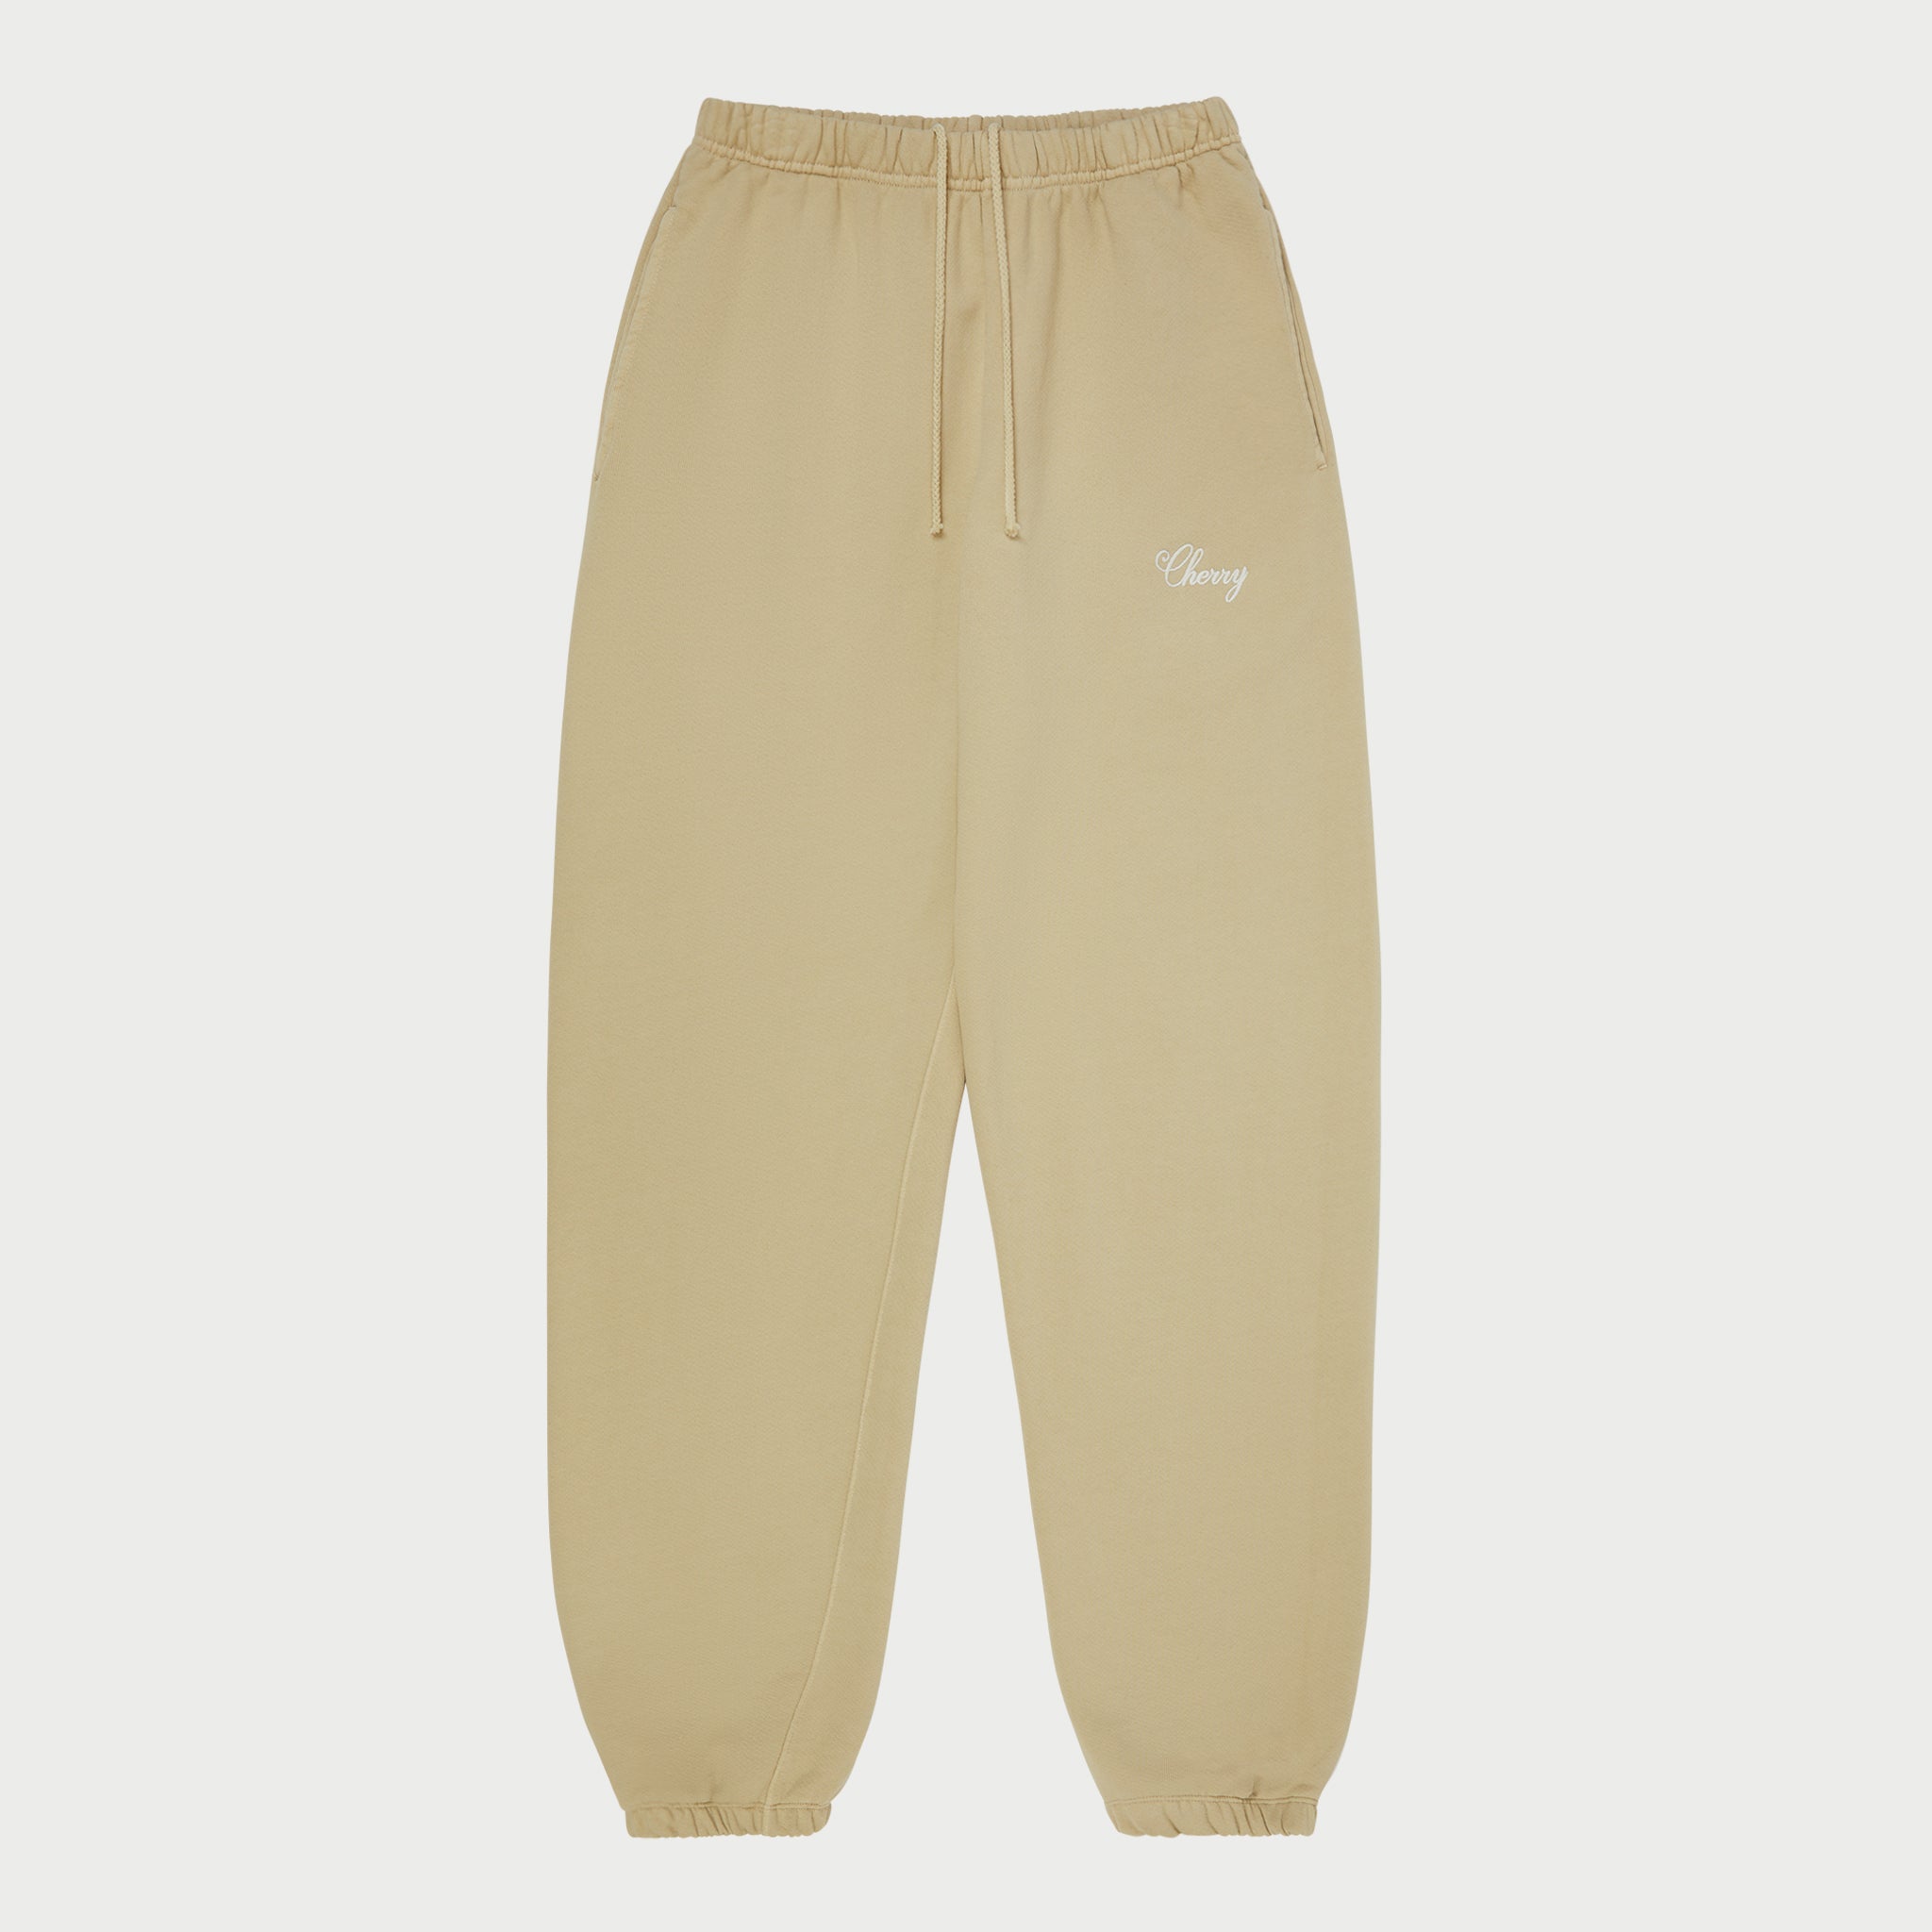 American Classic Sweatpants (Tan)